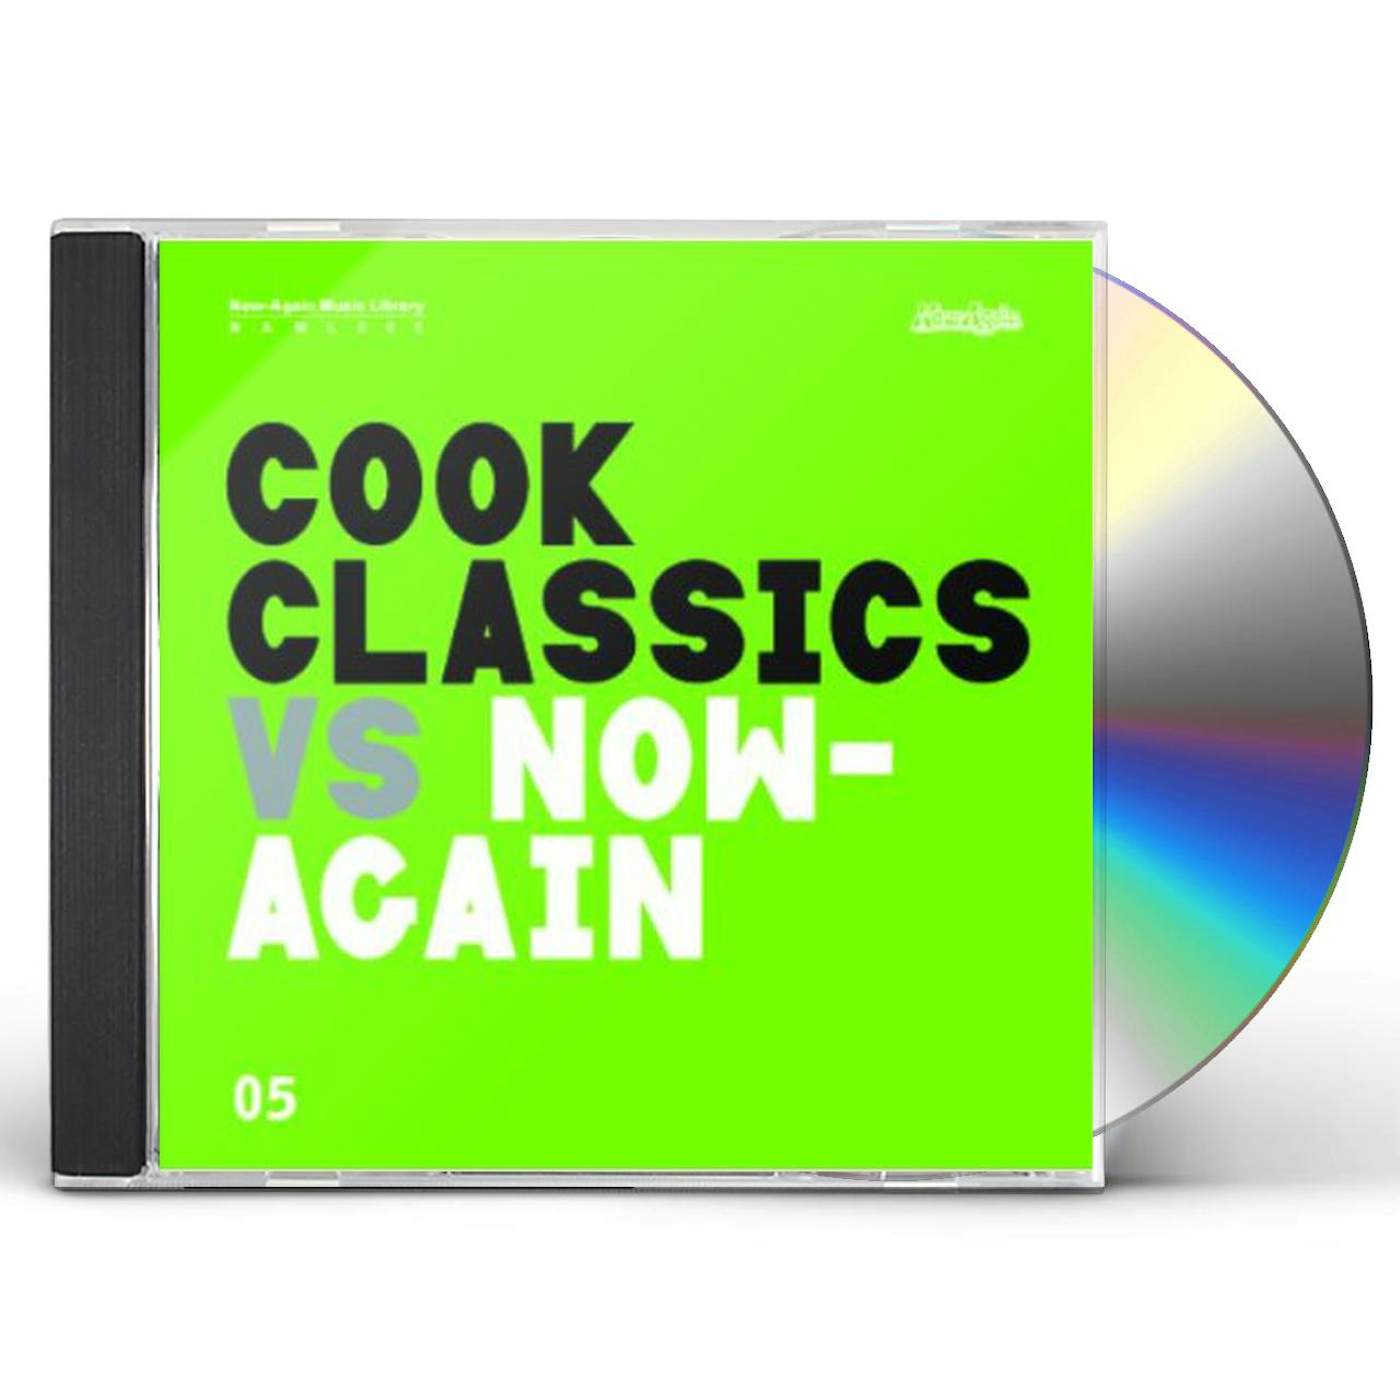 COOK CLASSICS VS. NOW-AGAIN CD